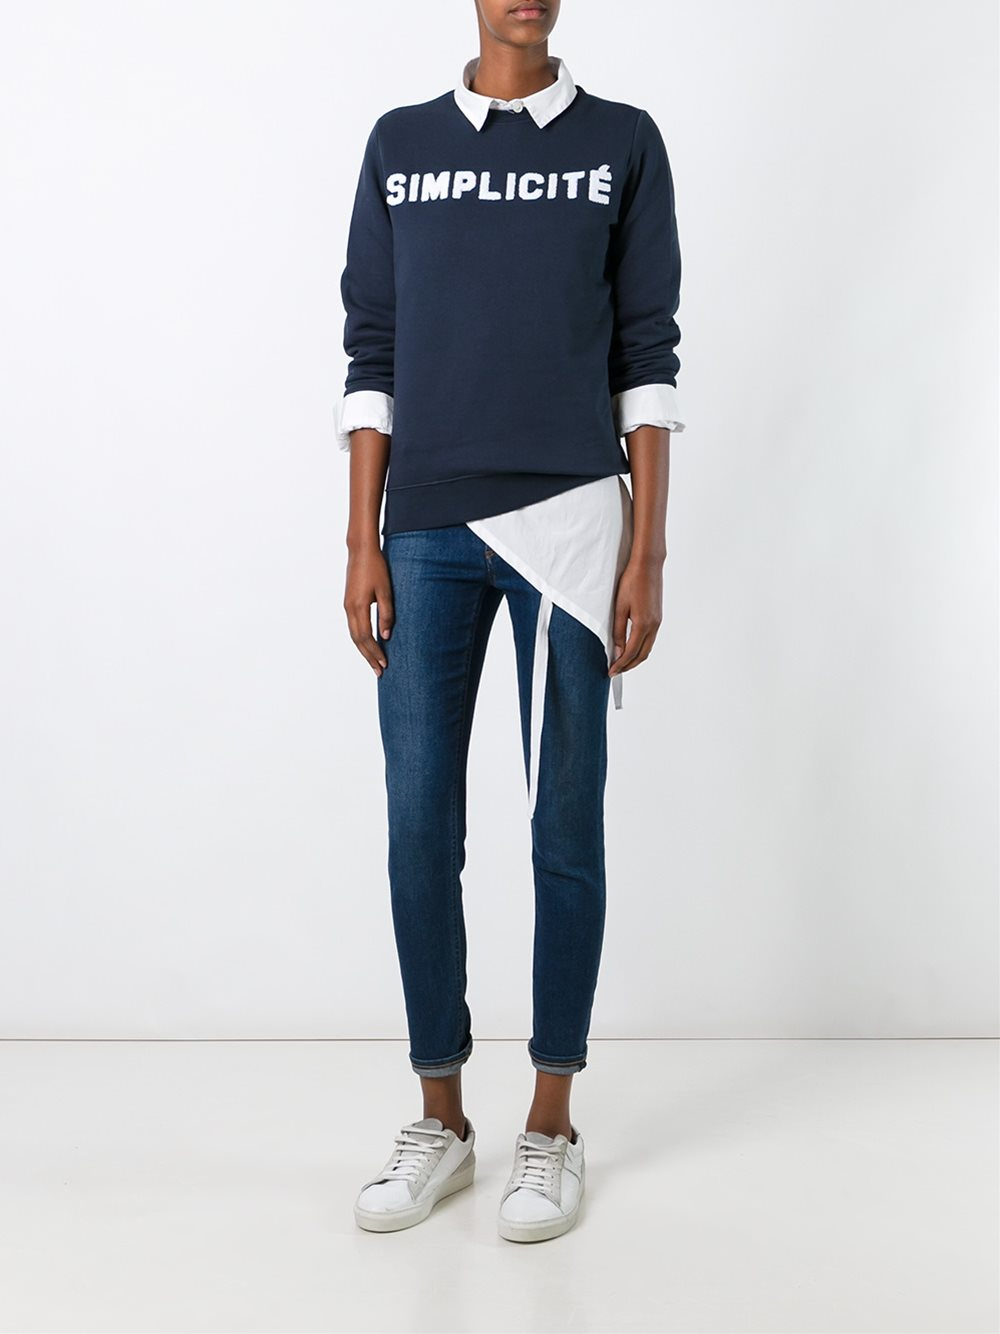 Zoe Karssen 'simplicité' Print Sweatshirt in Blue for Men | Lyst